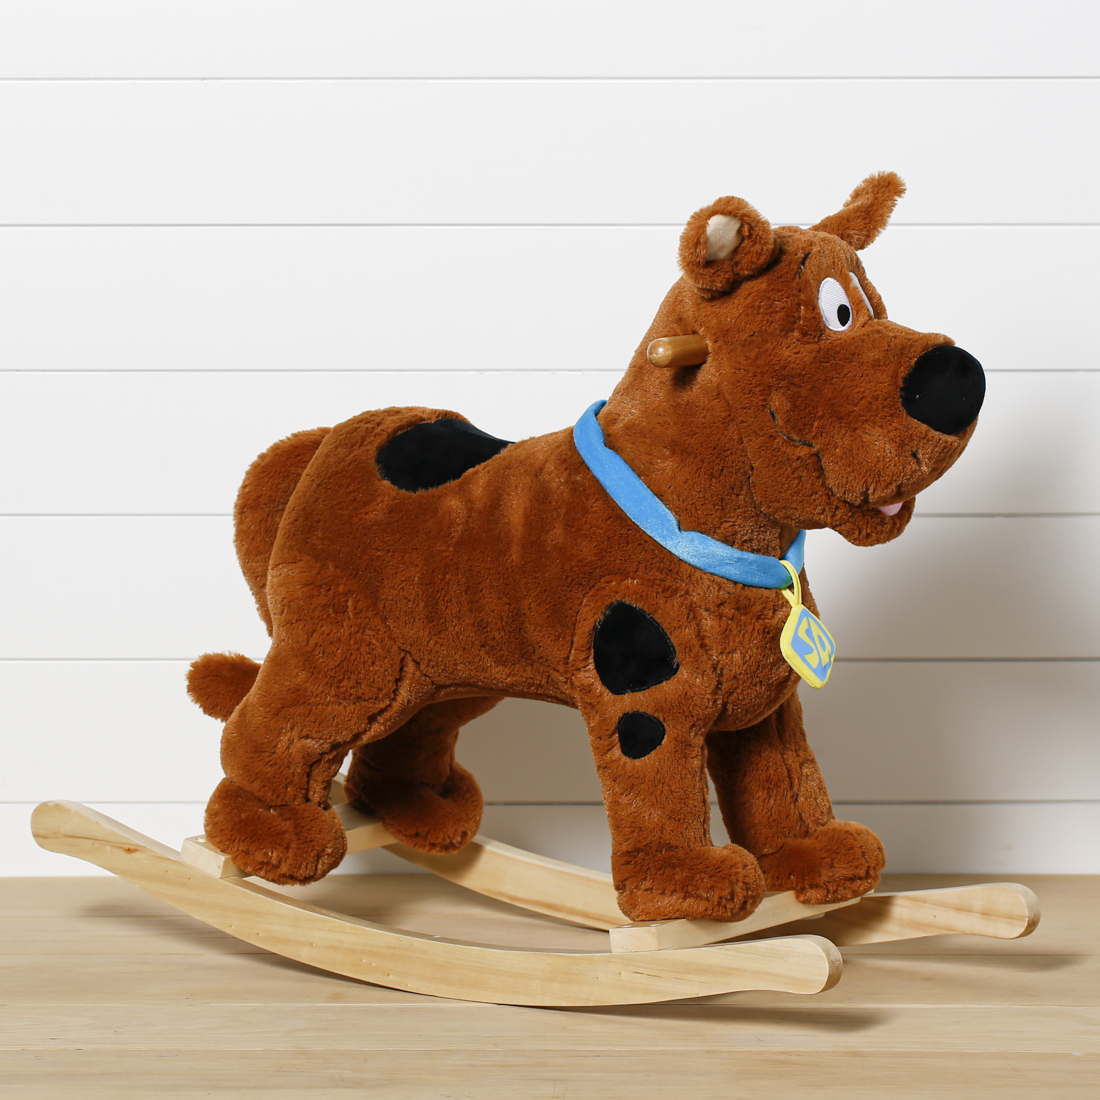 Toys Cracker Barrel - roblox piggy doggy plush